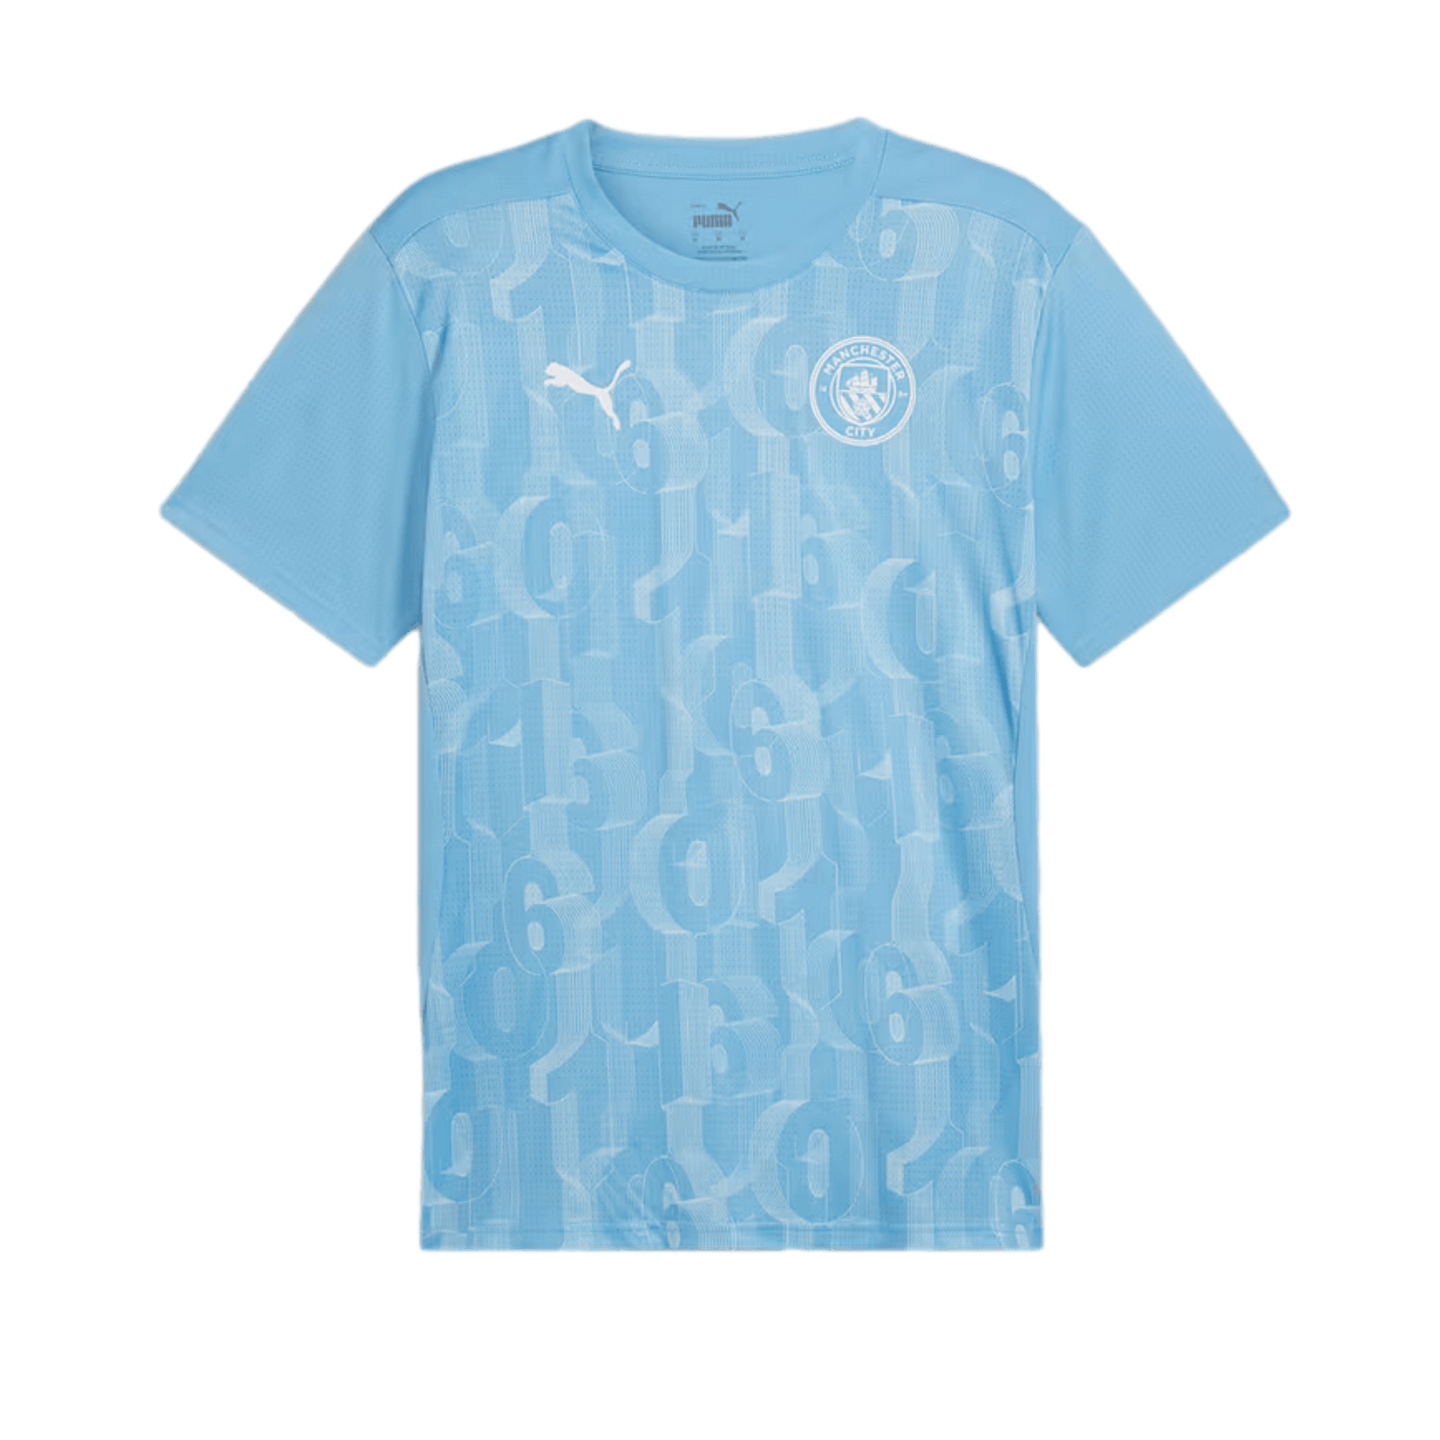 Camiseta prepartido del Manchester City de Puma